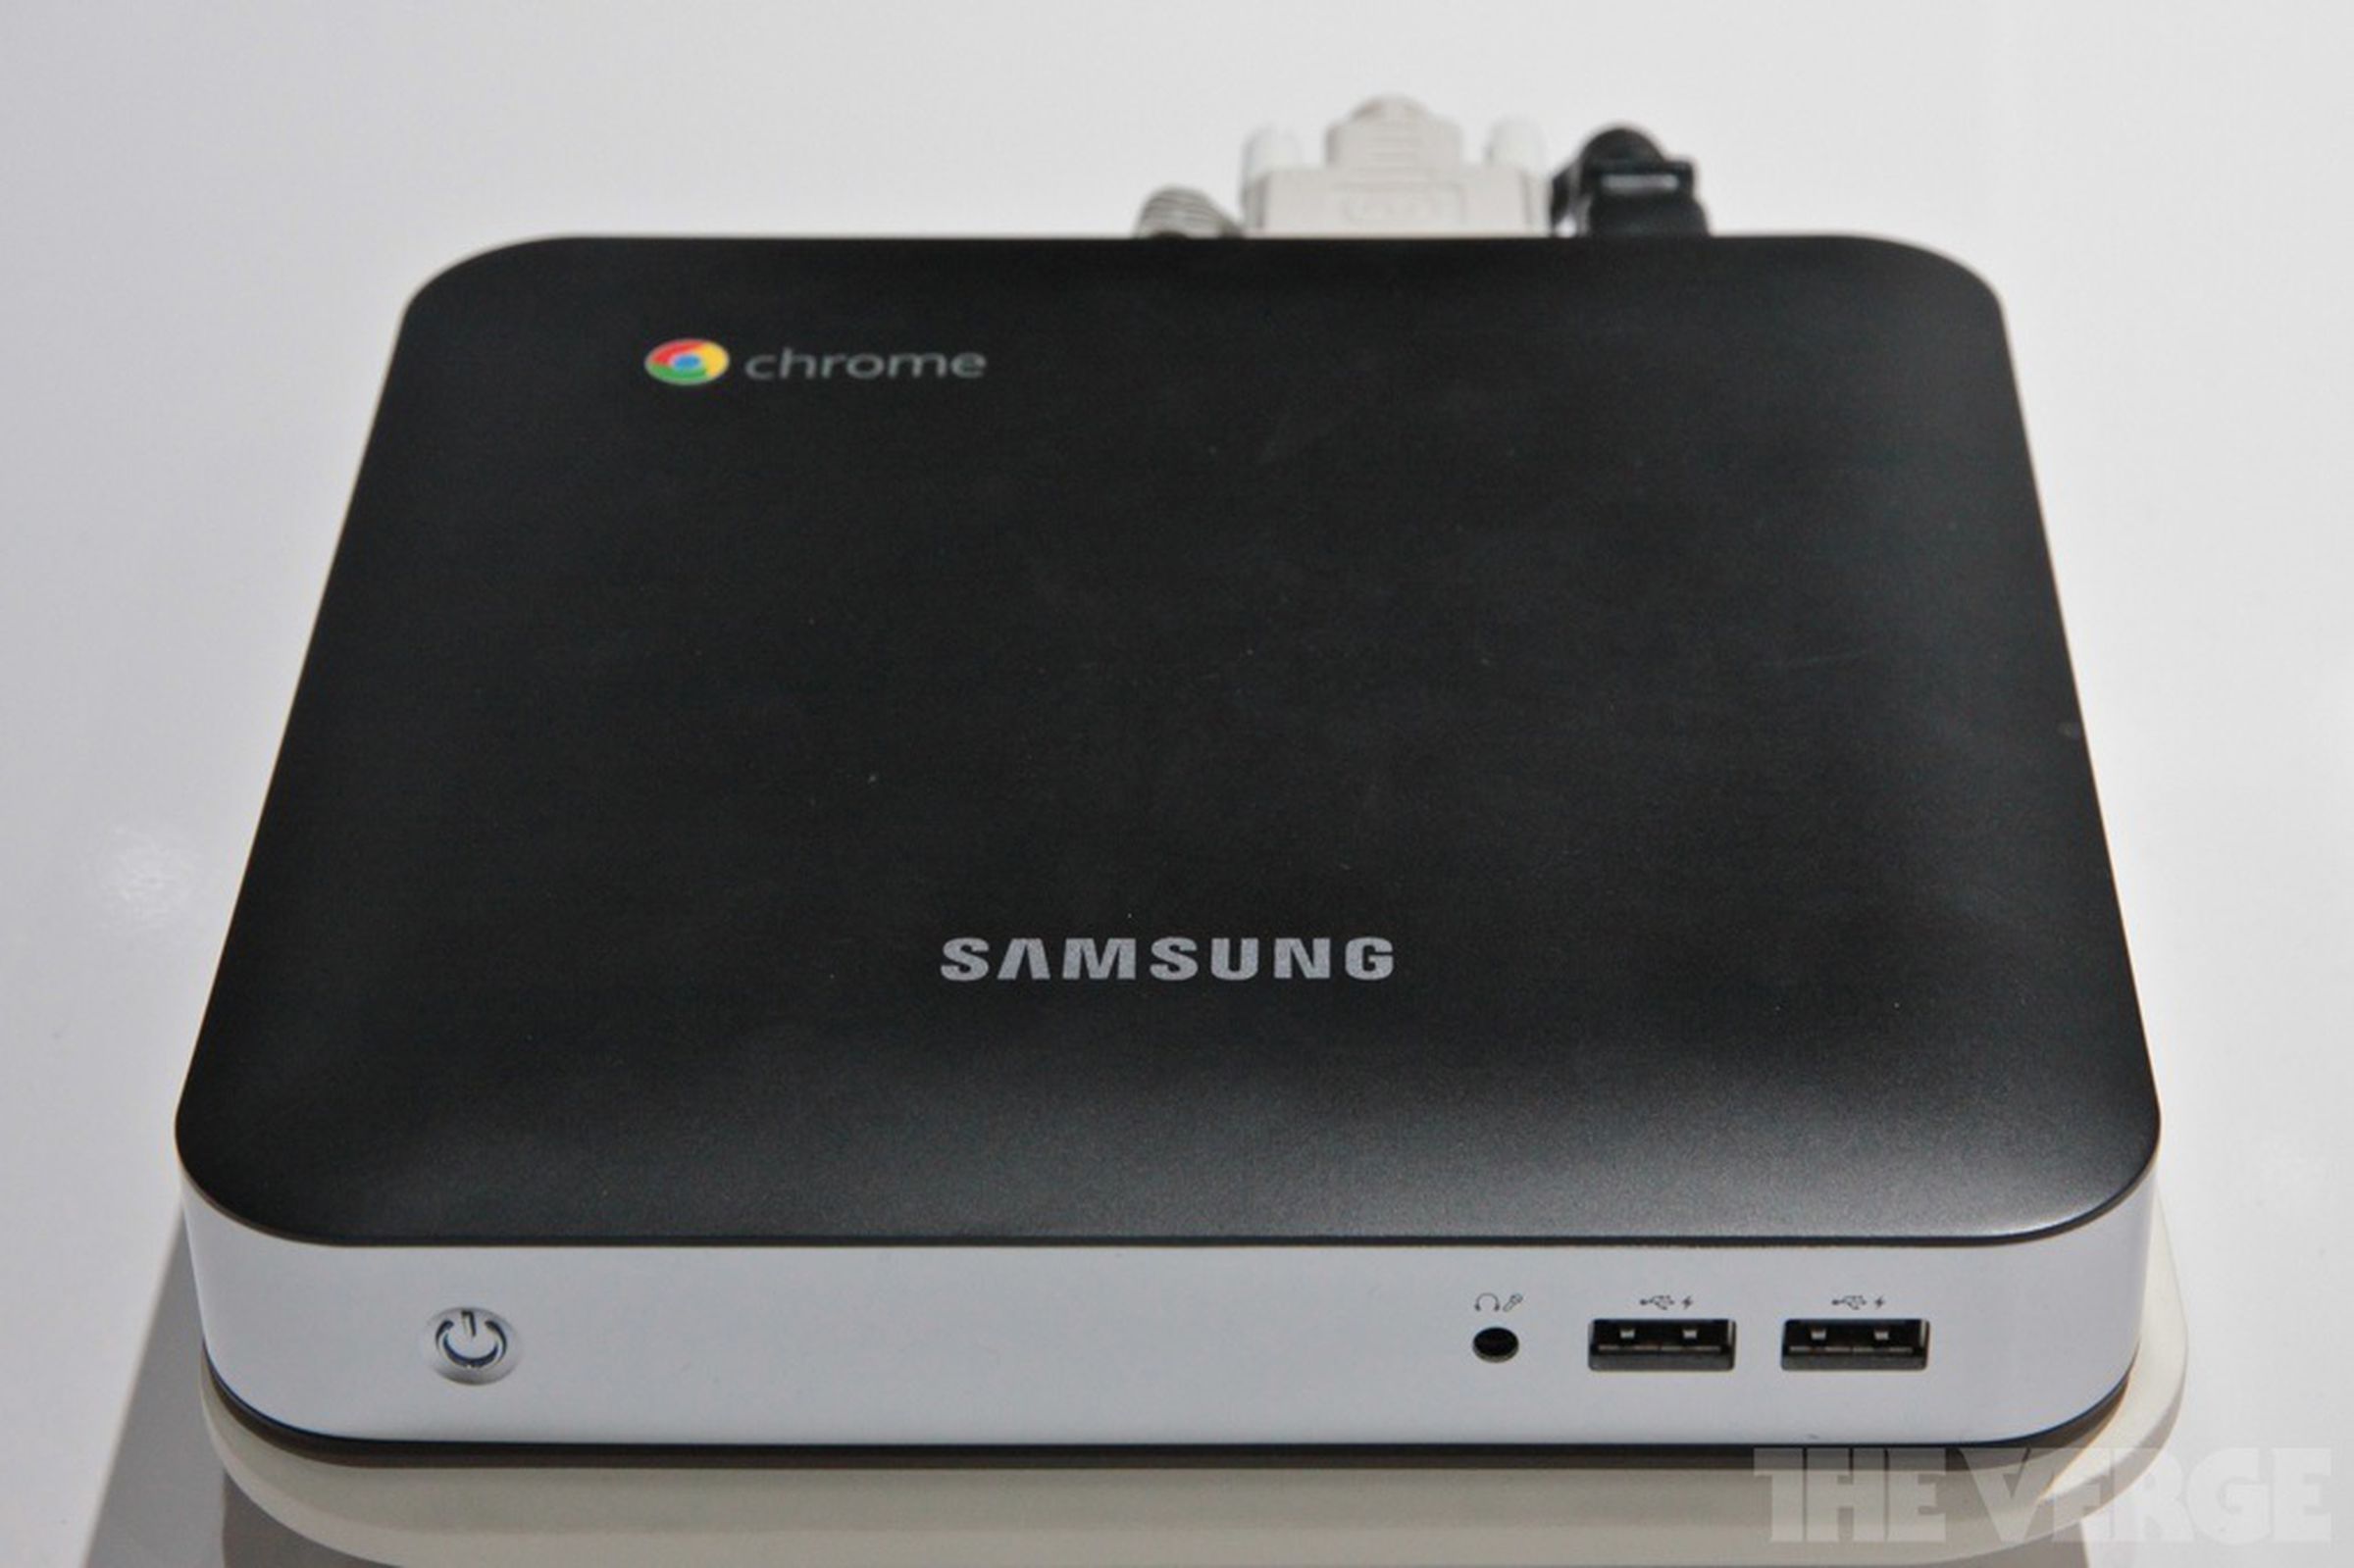 Samsung Series 3 Chromebox hands-on photos